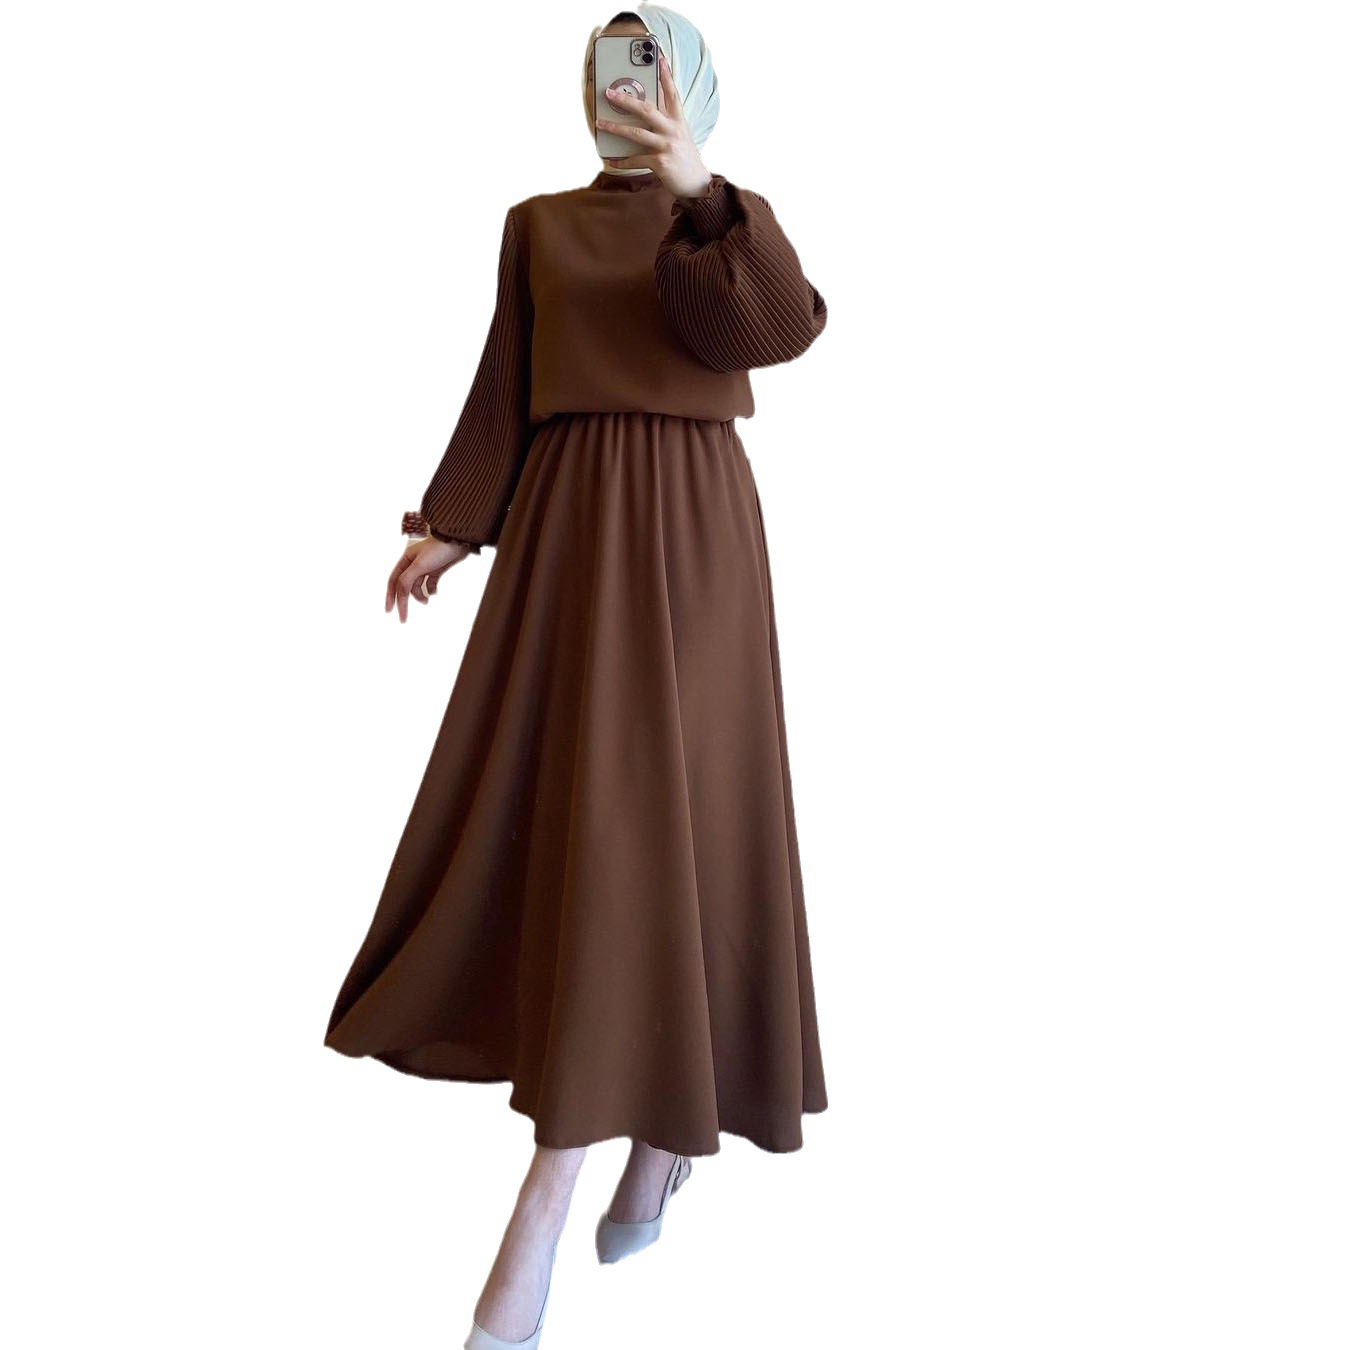 中东系带长连衣裙Middle Eastern Arab lace up dress long skirt - 图3